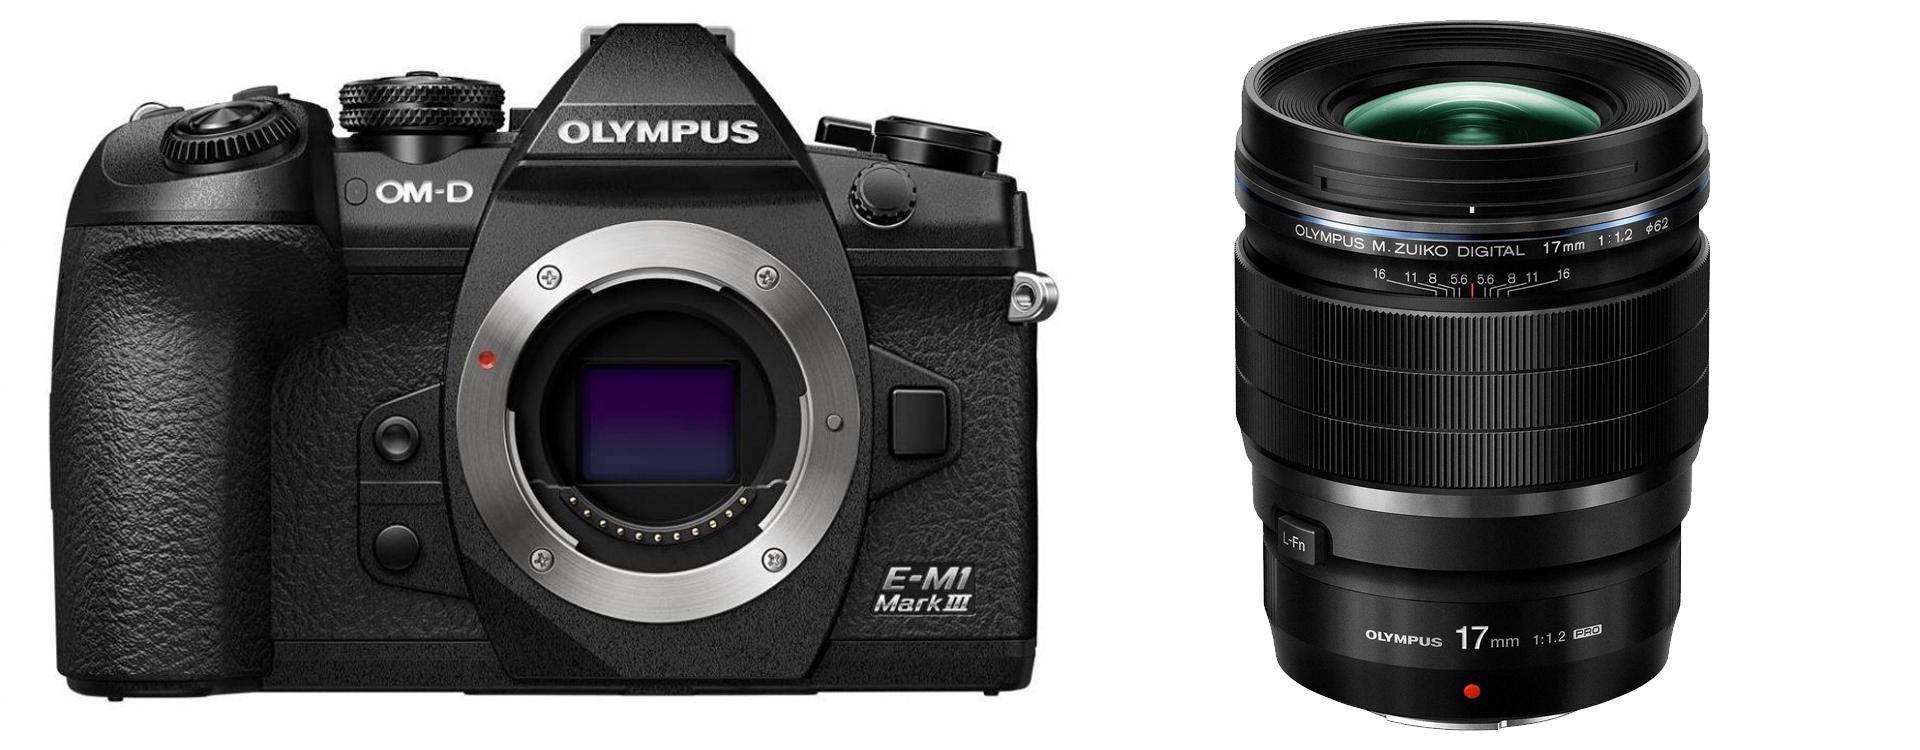 Objetivo Olympus 17 mm F1.2 PRO gratis con tu E-M1 mark III